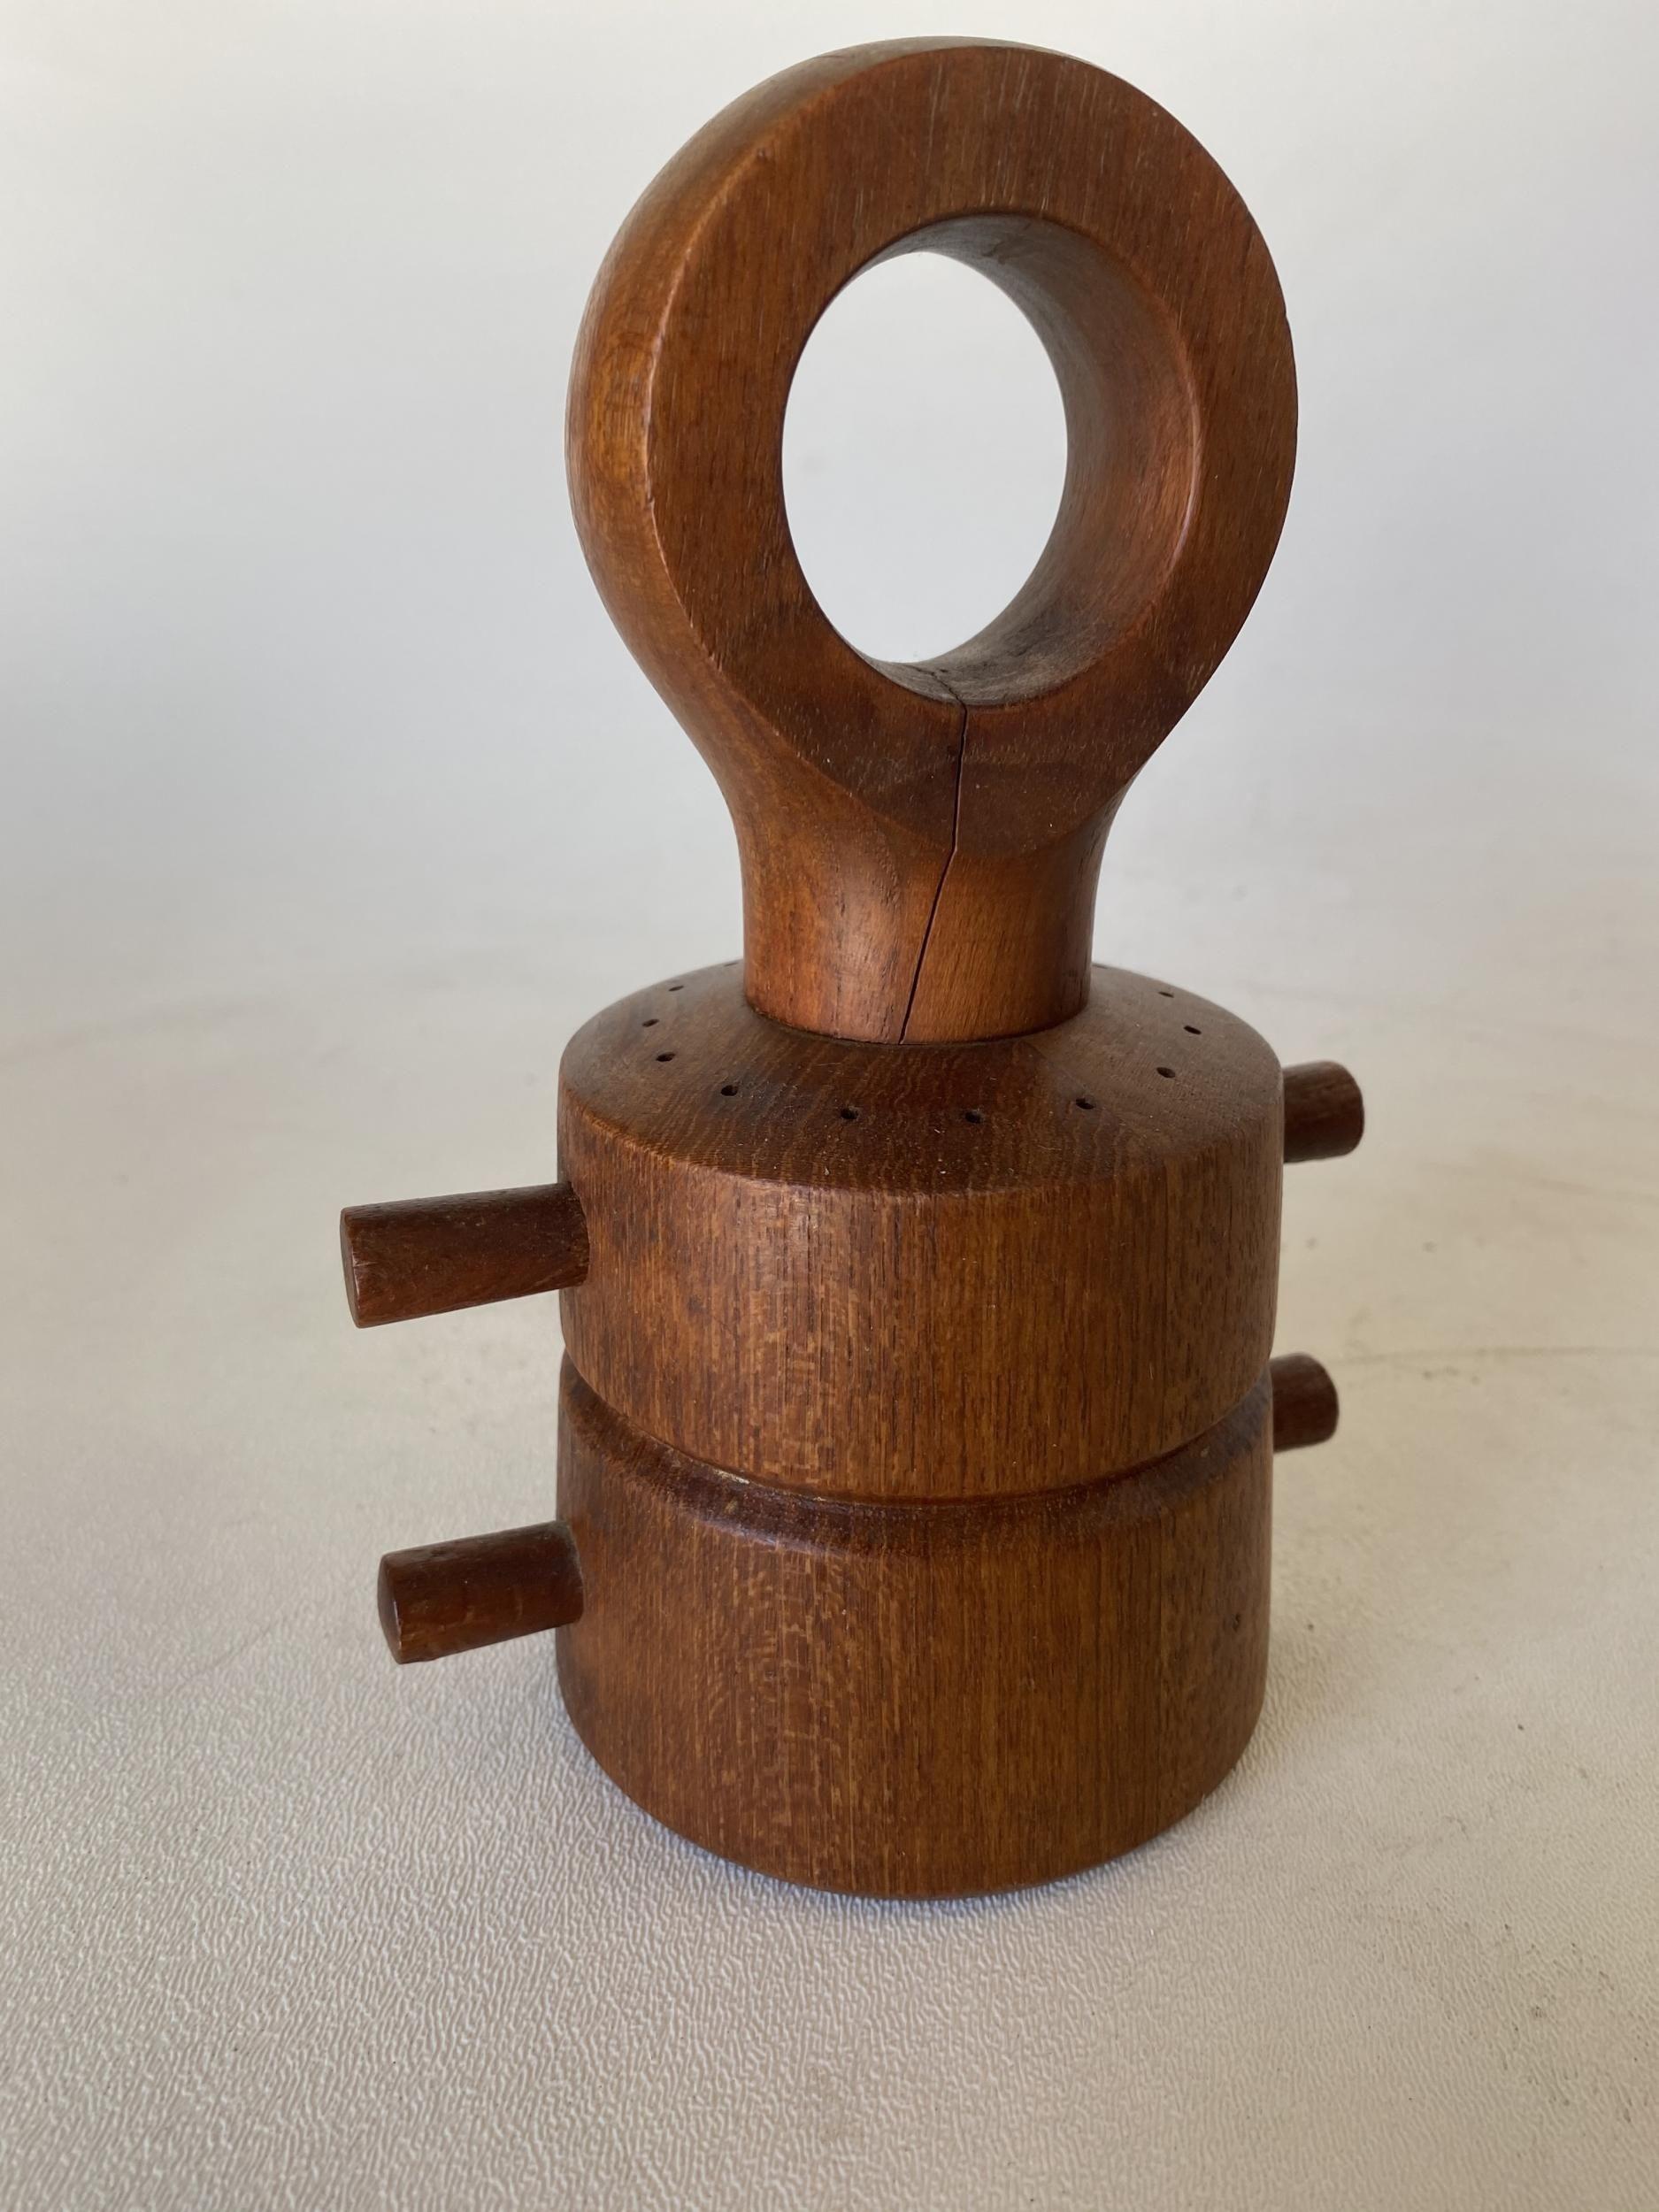 Set of 2 Vintage Mid Century Modern Jens Quistgaard made in Denmark pepper grinders.

Small Grinder: 7